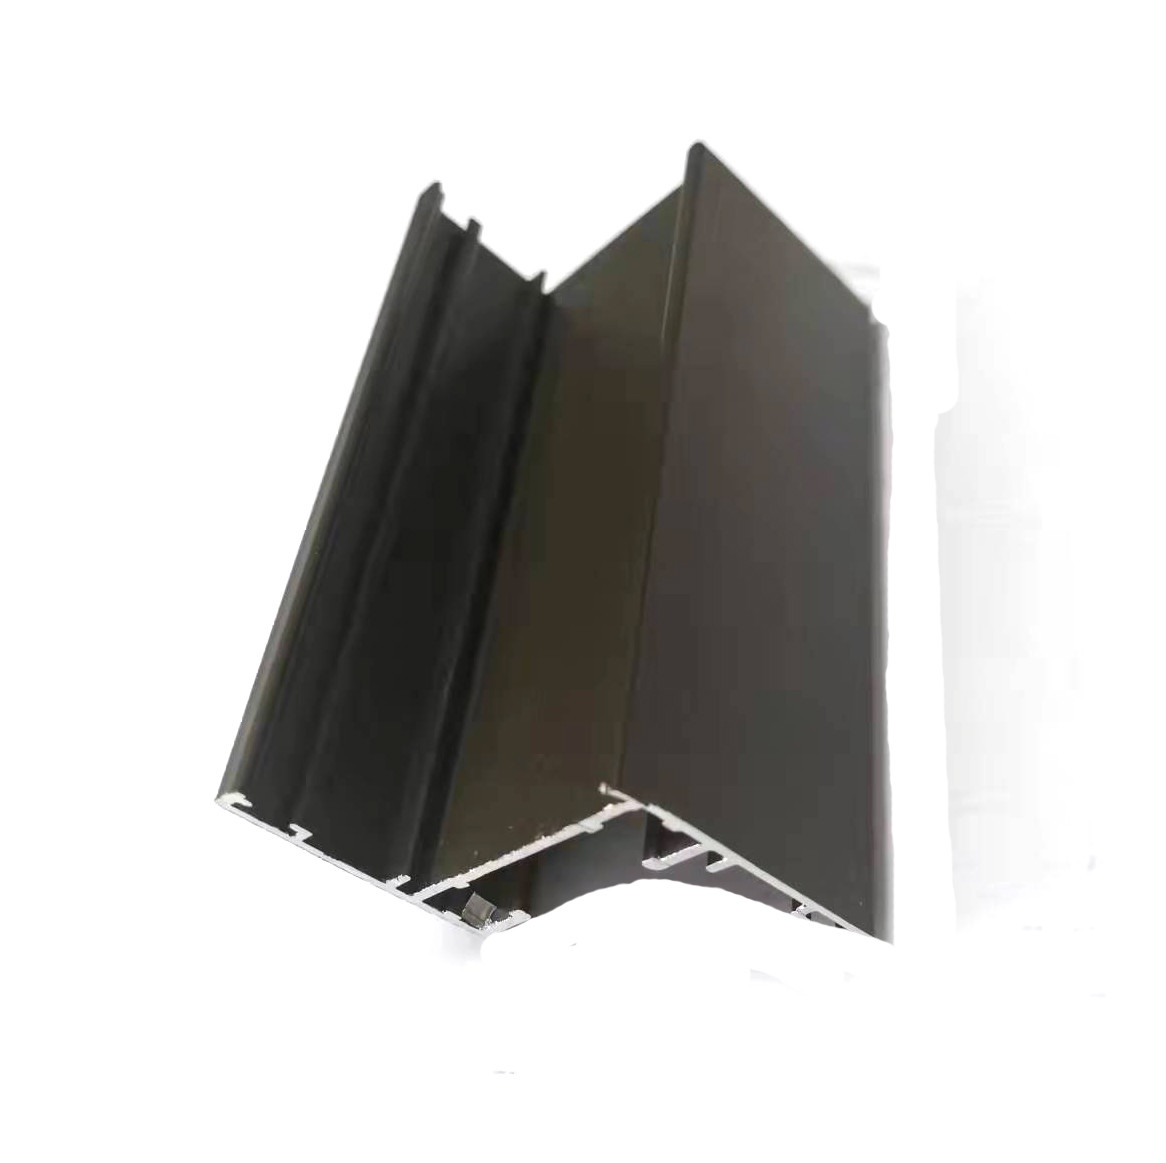 2.5mm Thickness Aluminum Window Profiles Casement Frame Set Building Materials